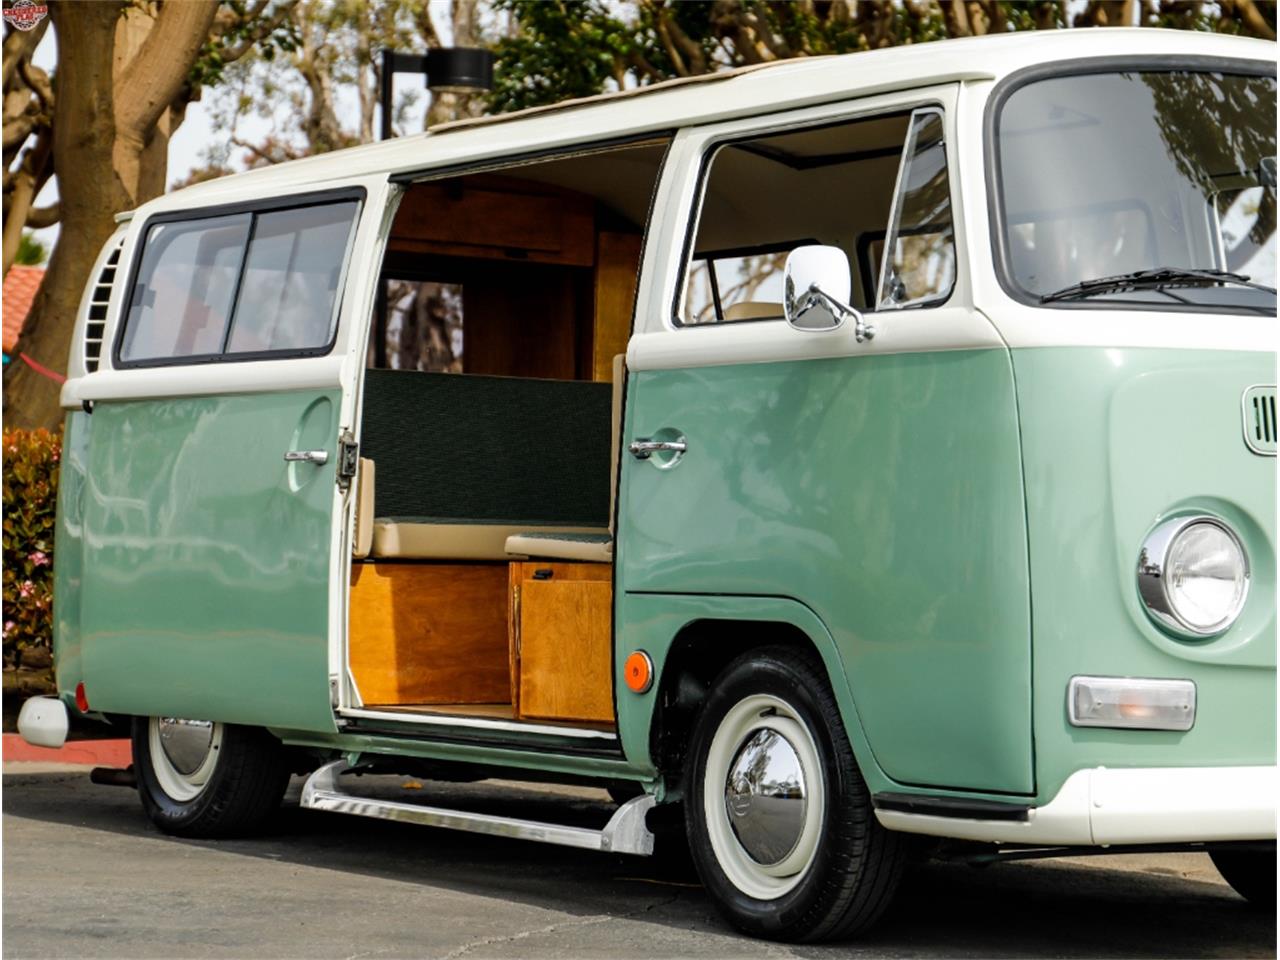 1968 Volkswagen Bus for Sale | ClassicCars.com | CC-1074236